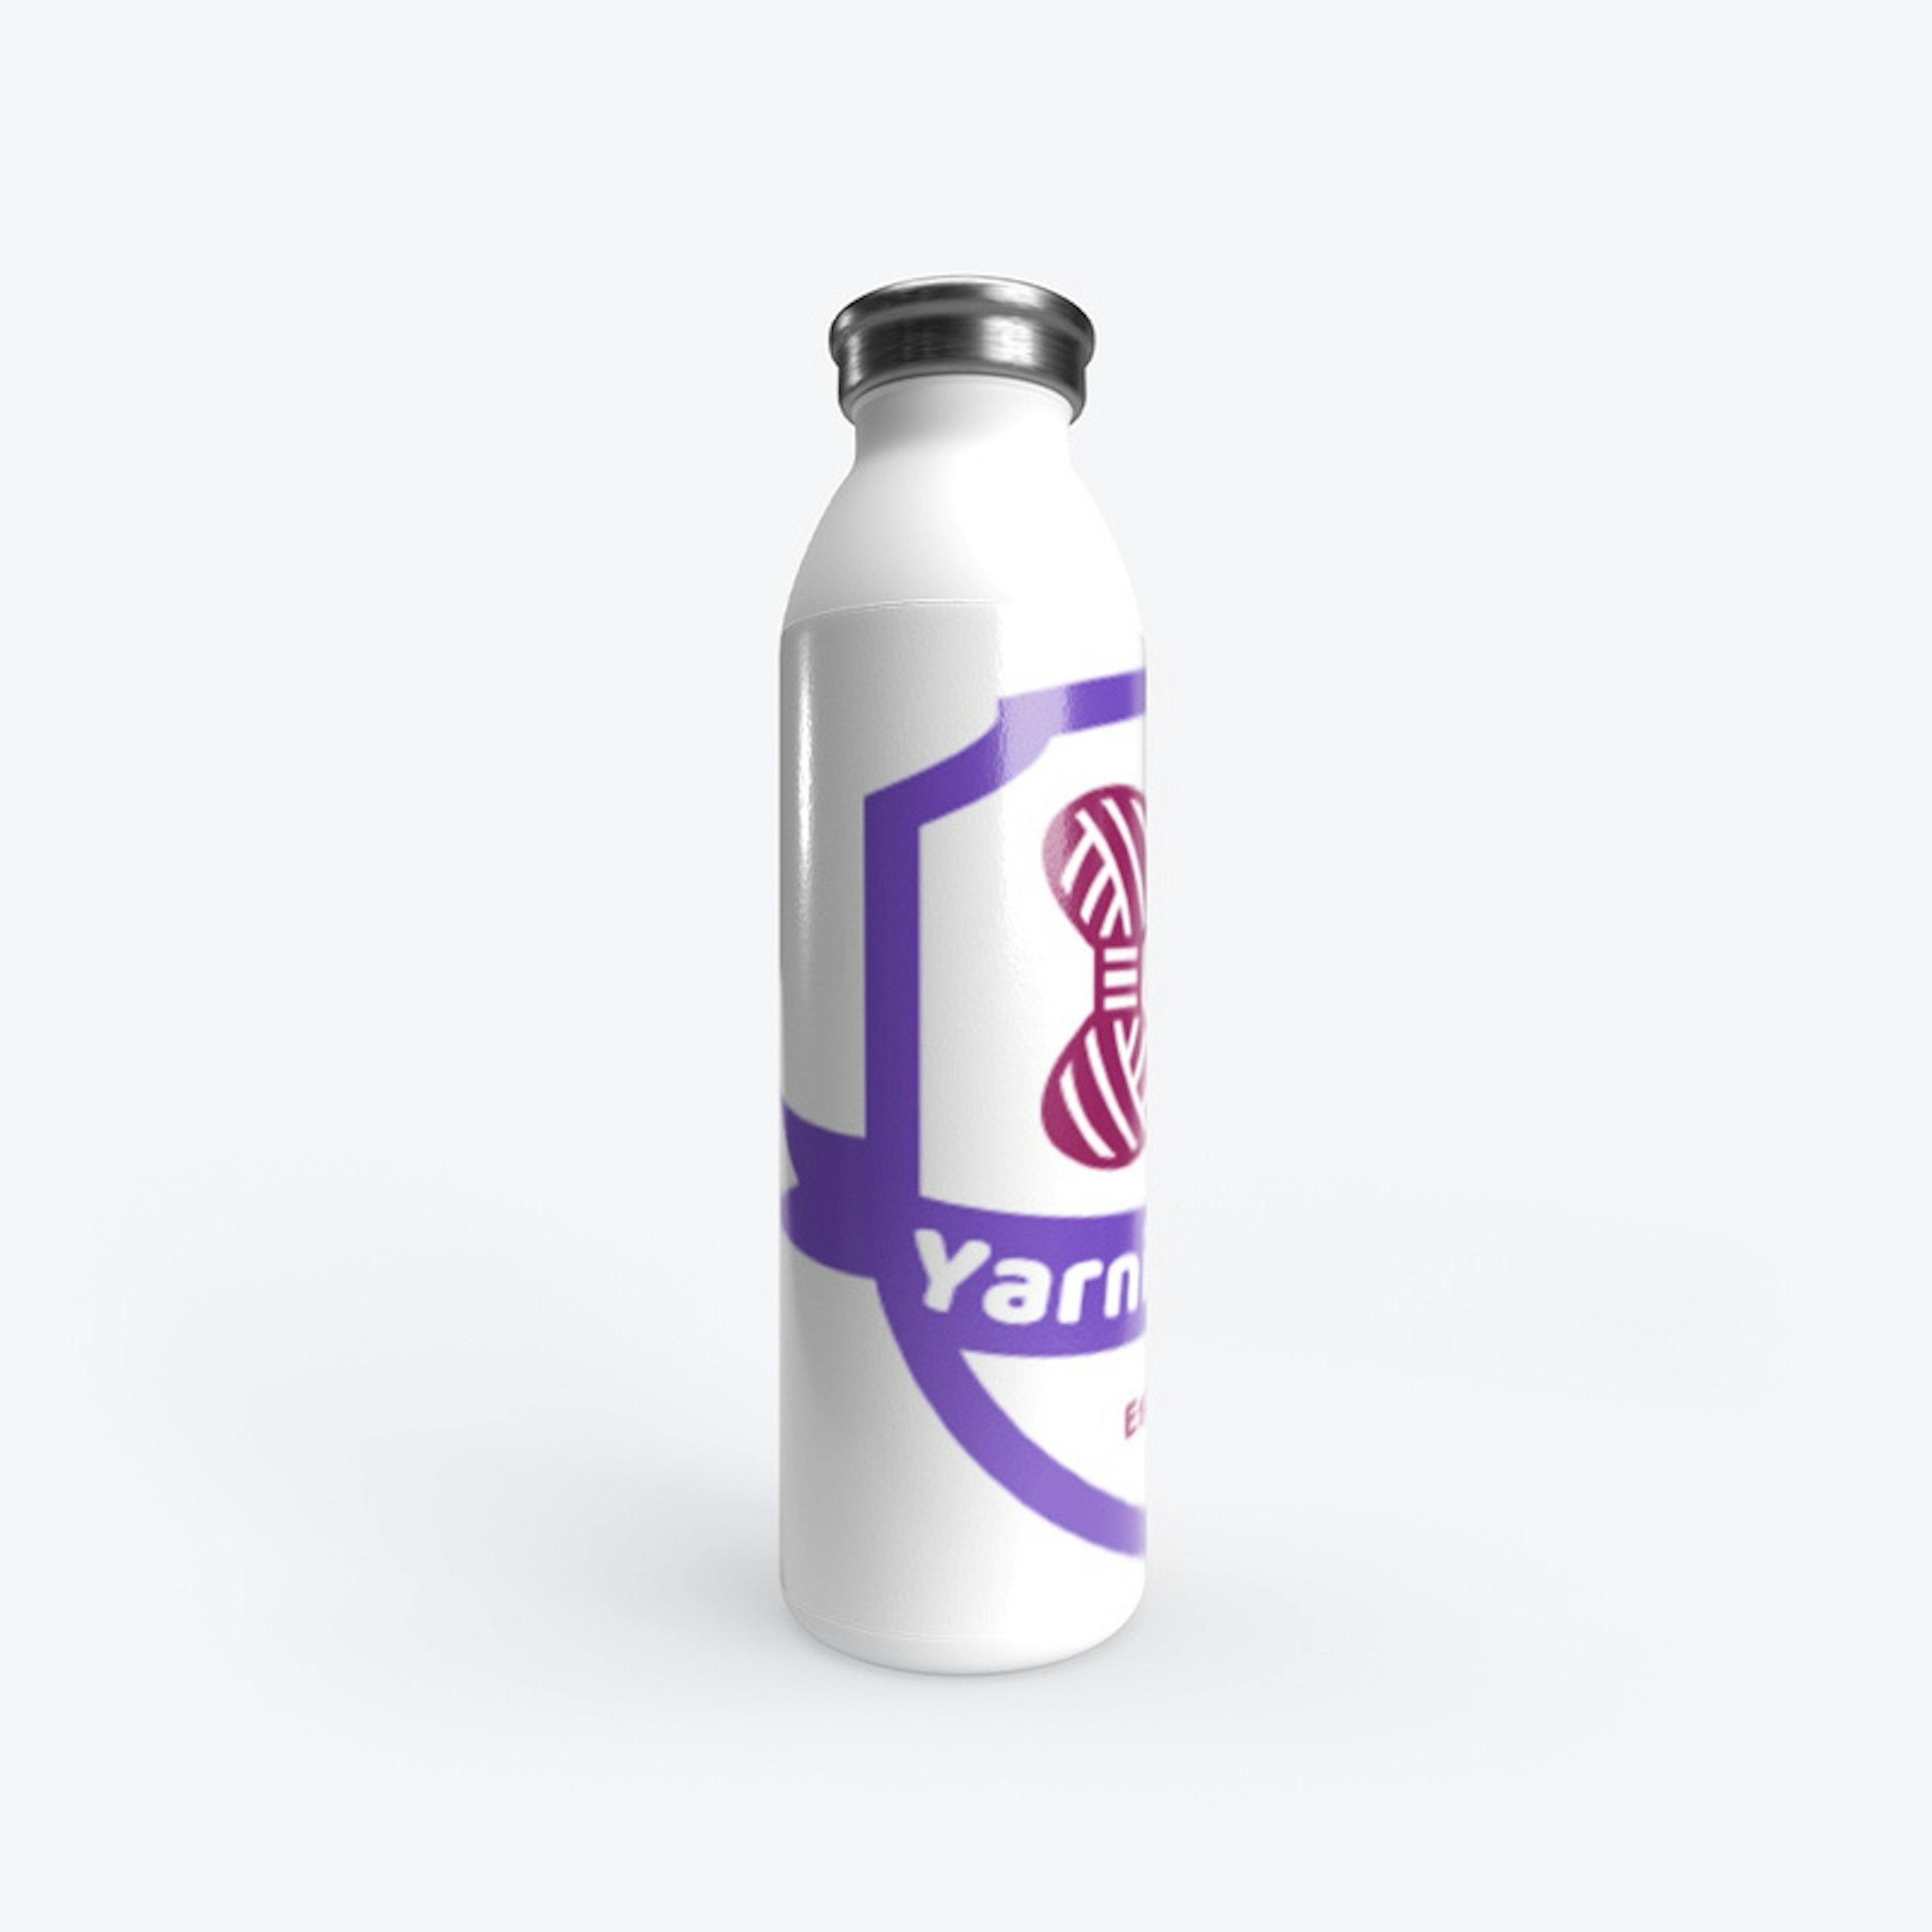 Yarniversity Shield - Yarn